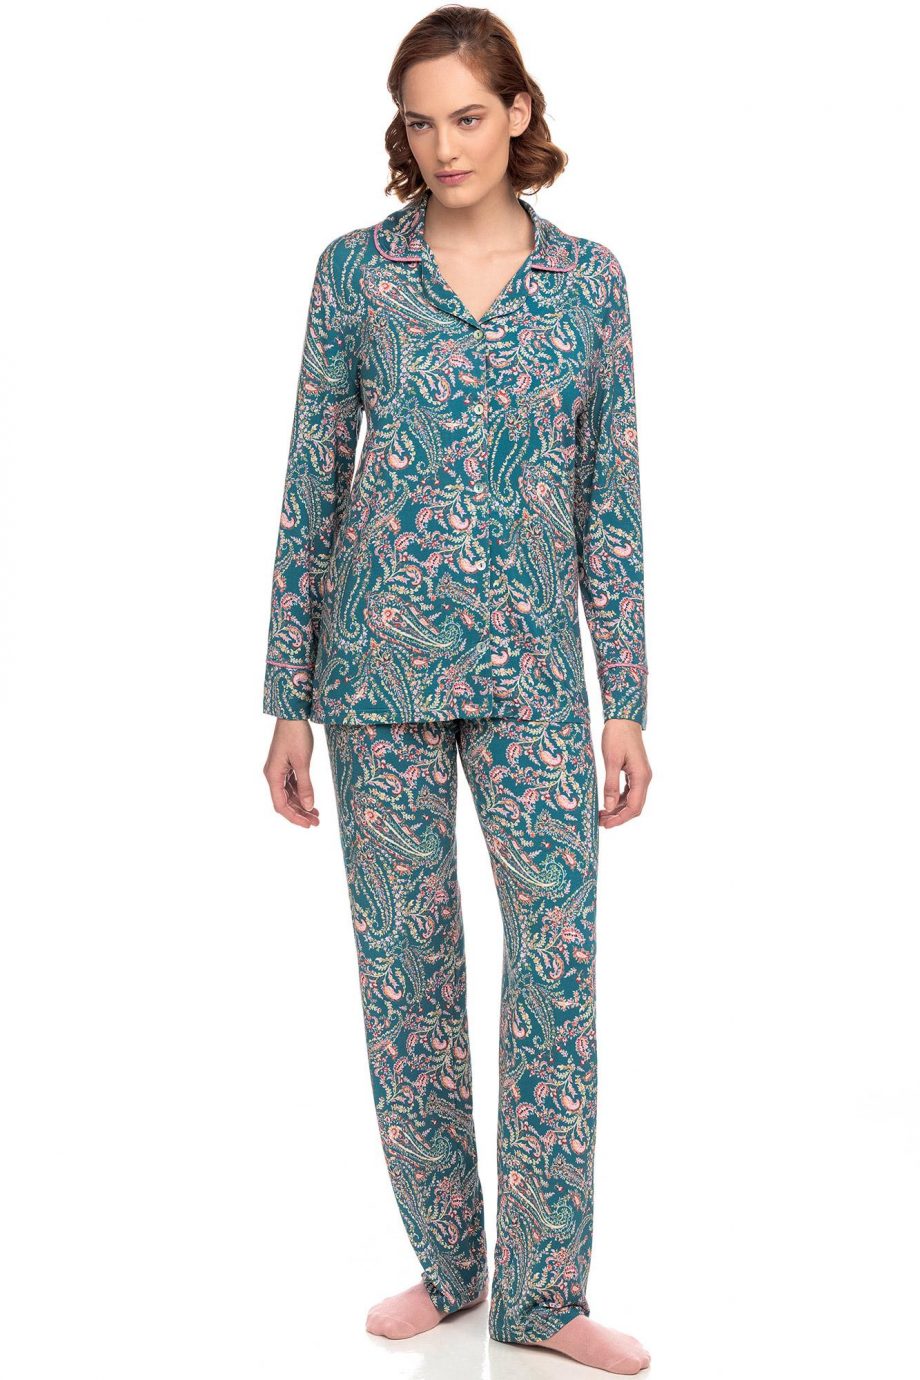 Women’s buttoned Pyjamas